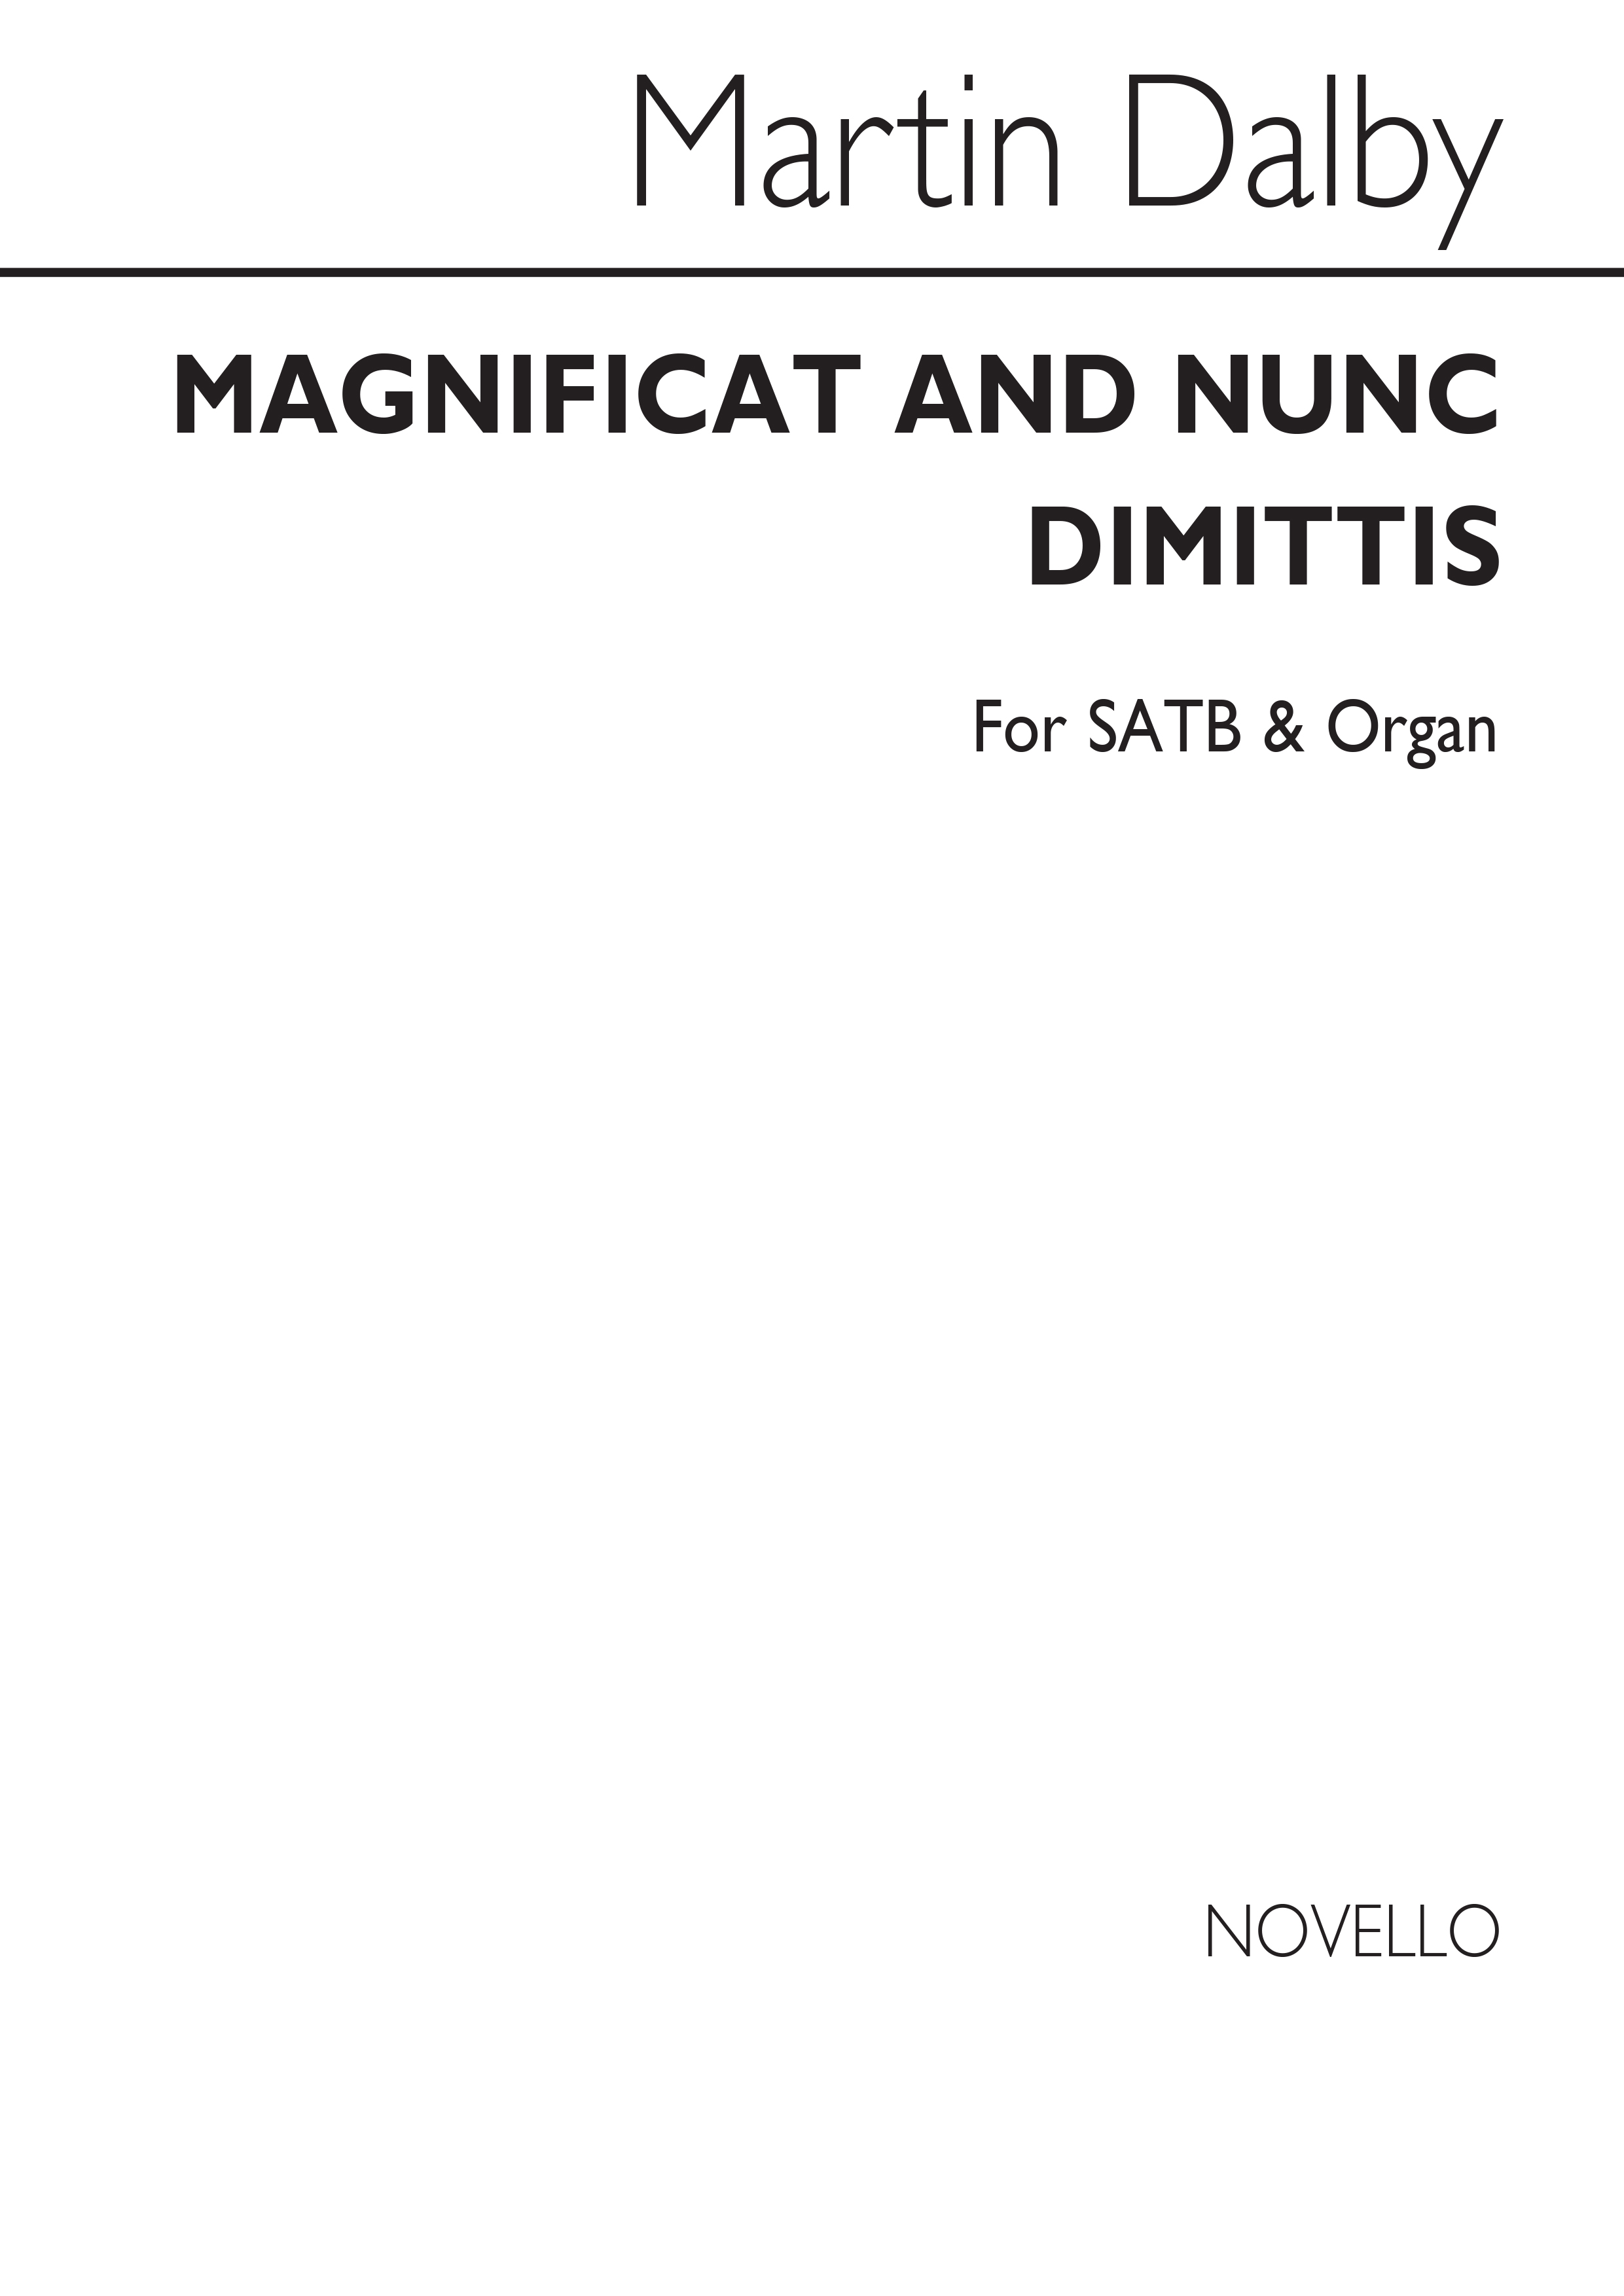 Dalby: Magnificat & Nunc Dimittis (Paisley Abbey) for SATB Chorus with Organ acc